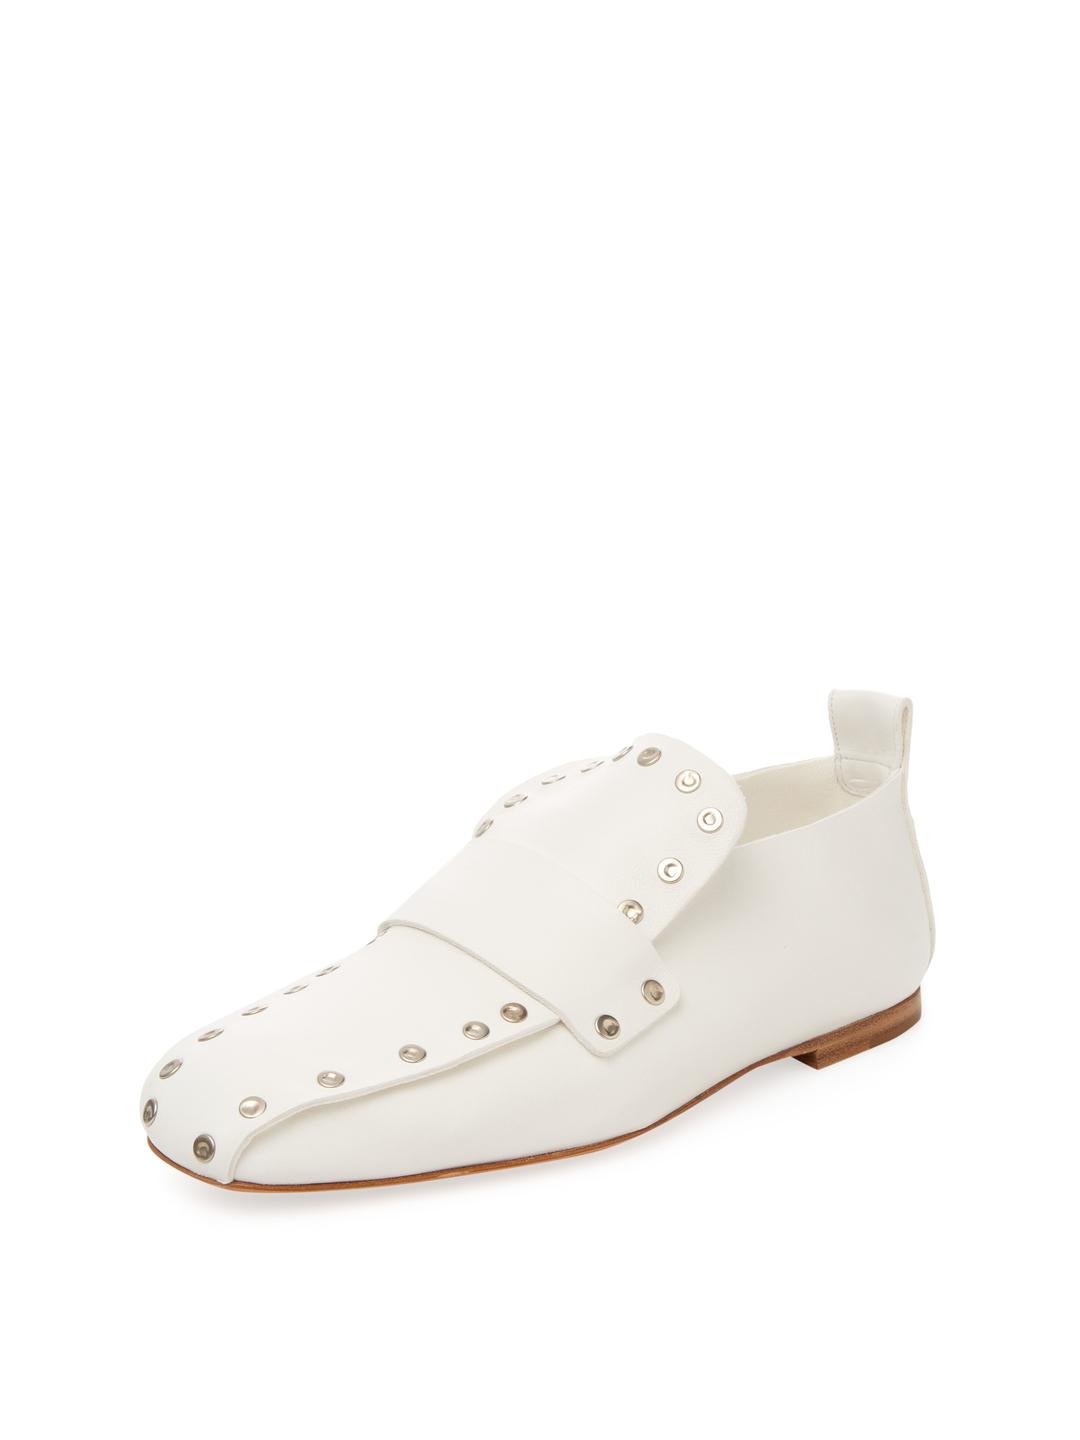 Celine Studded Leather Loafer in White 